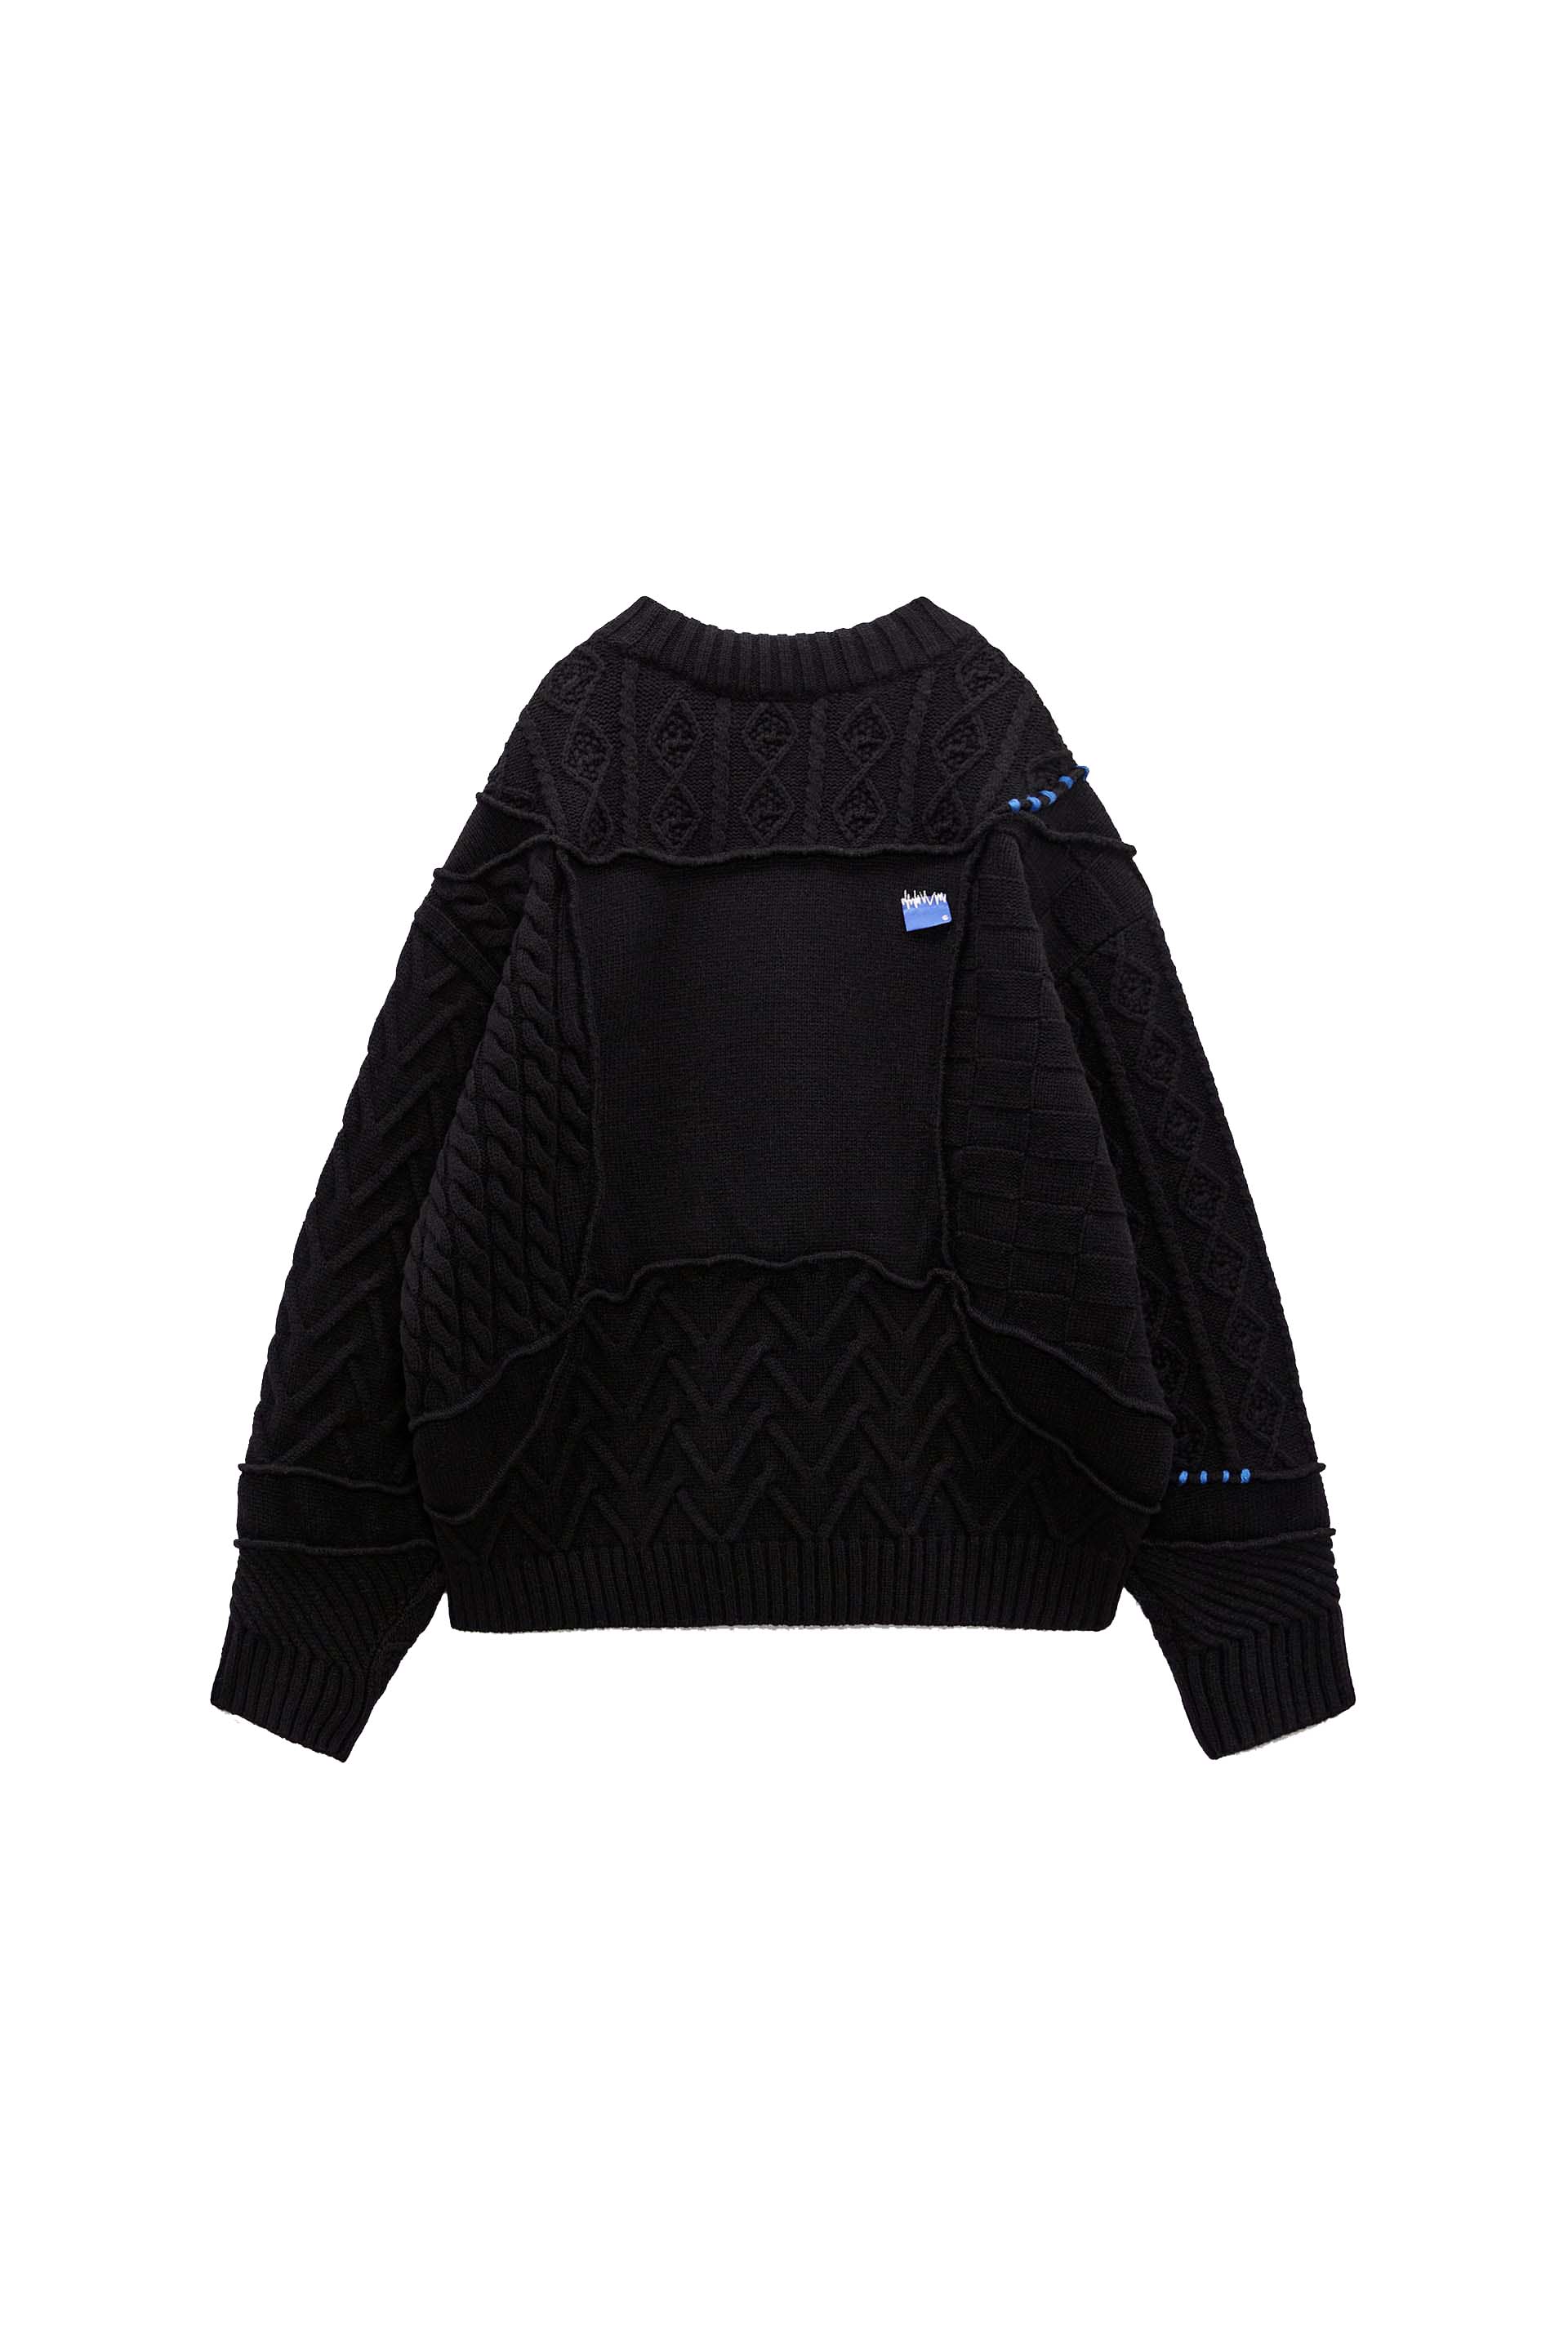 ADER error x Zara Oversized Patchwork Knit Mens Sweater Black 